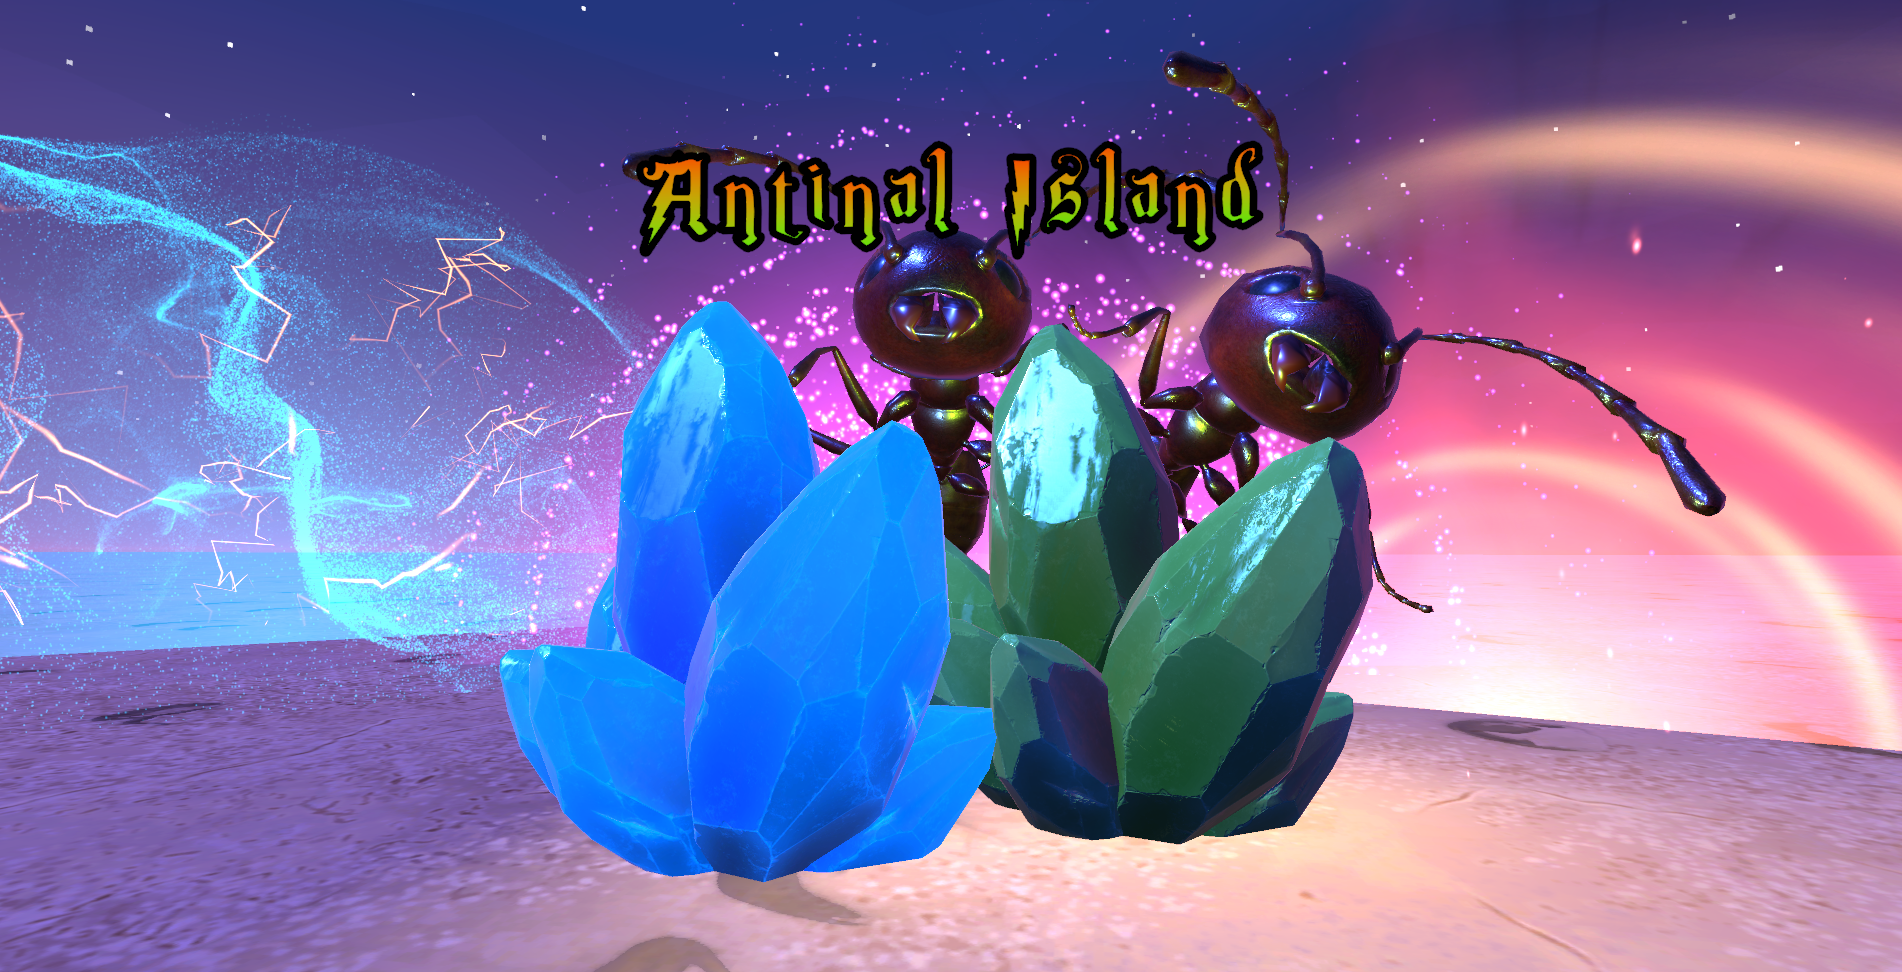 Antinal Island